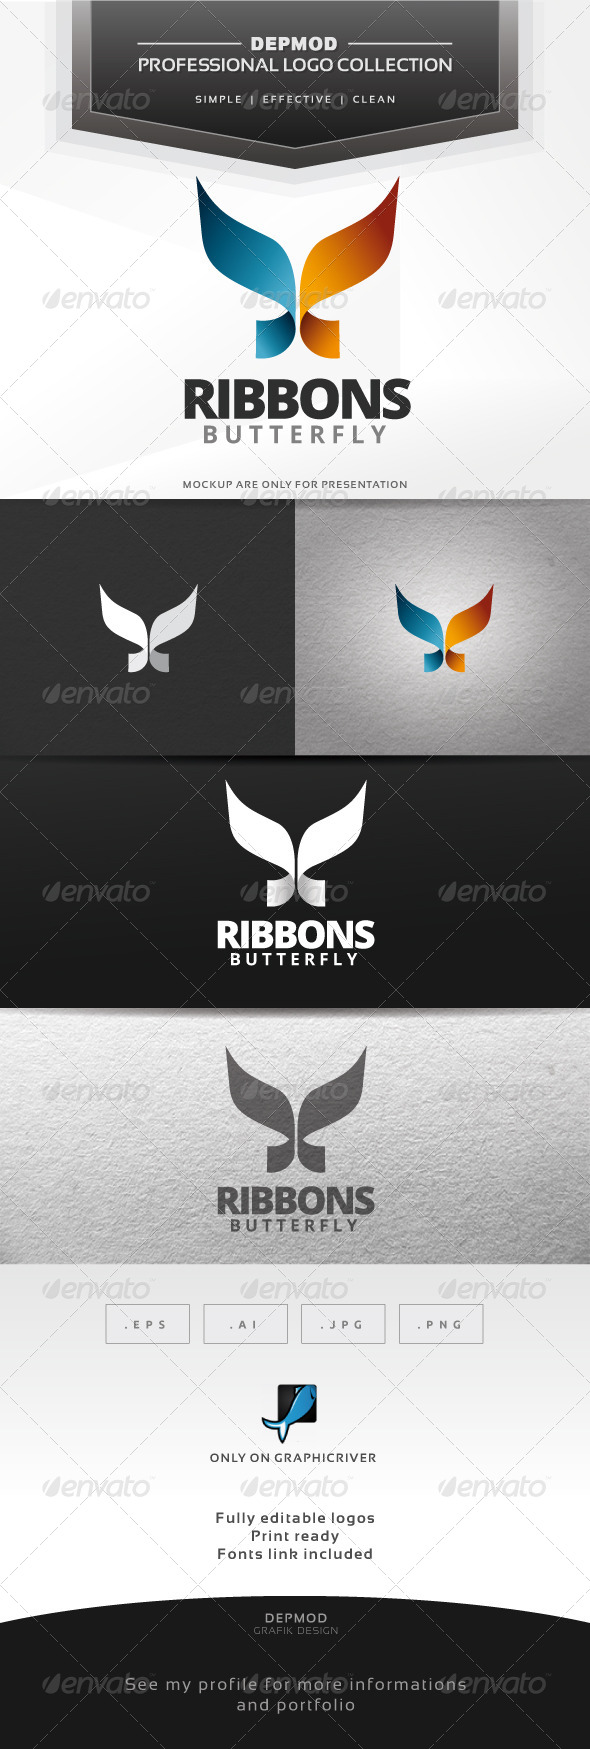 Ribbons Butterfly Logo